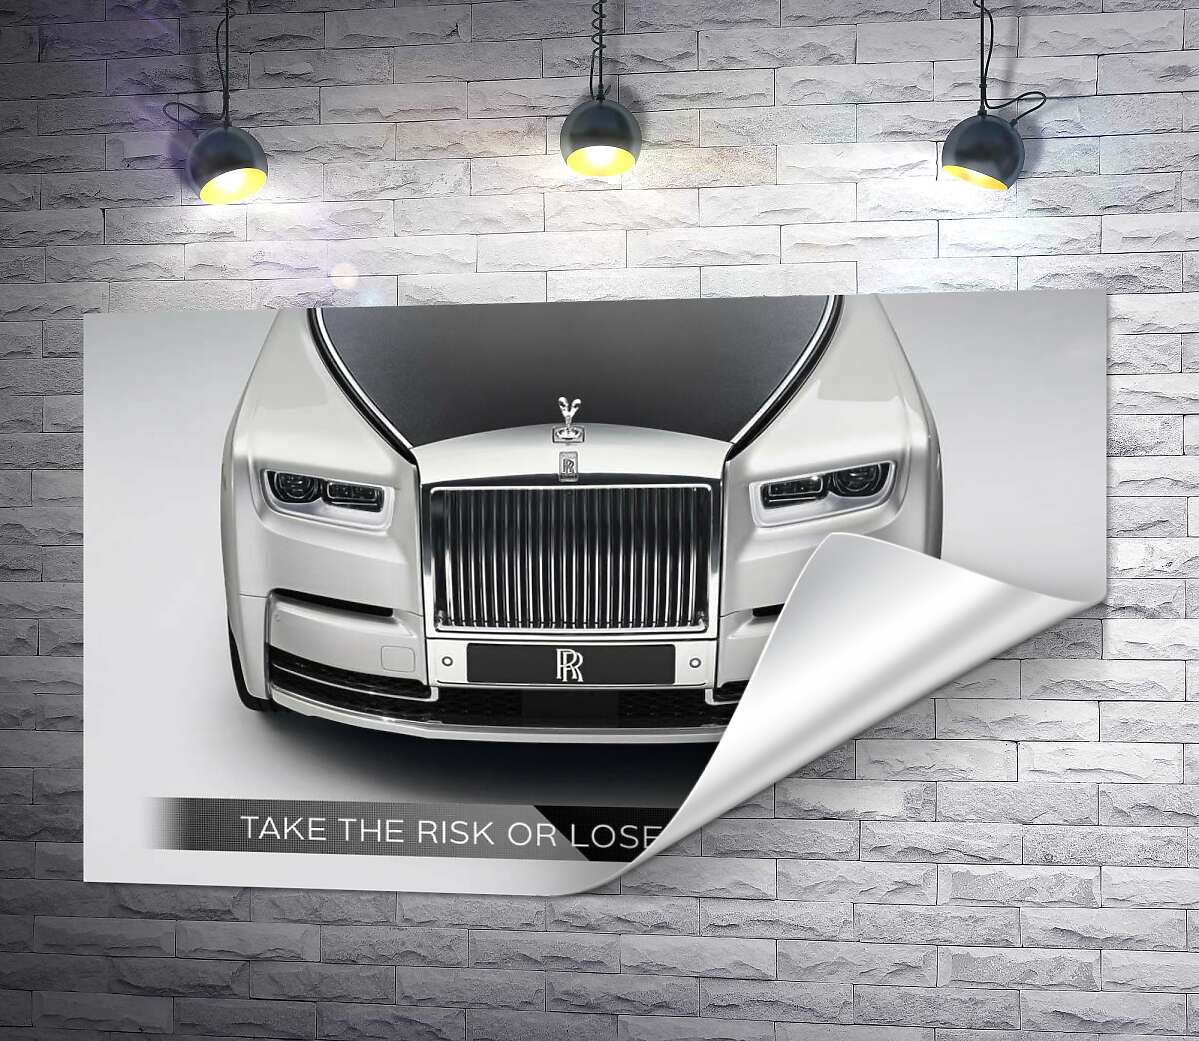 печать Стильный Rolls Royce - Take the risk or lose the chance